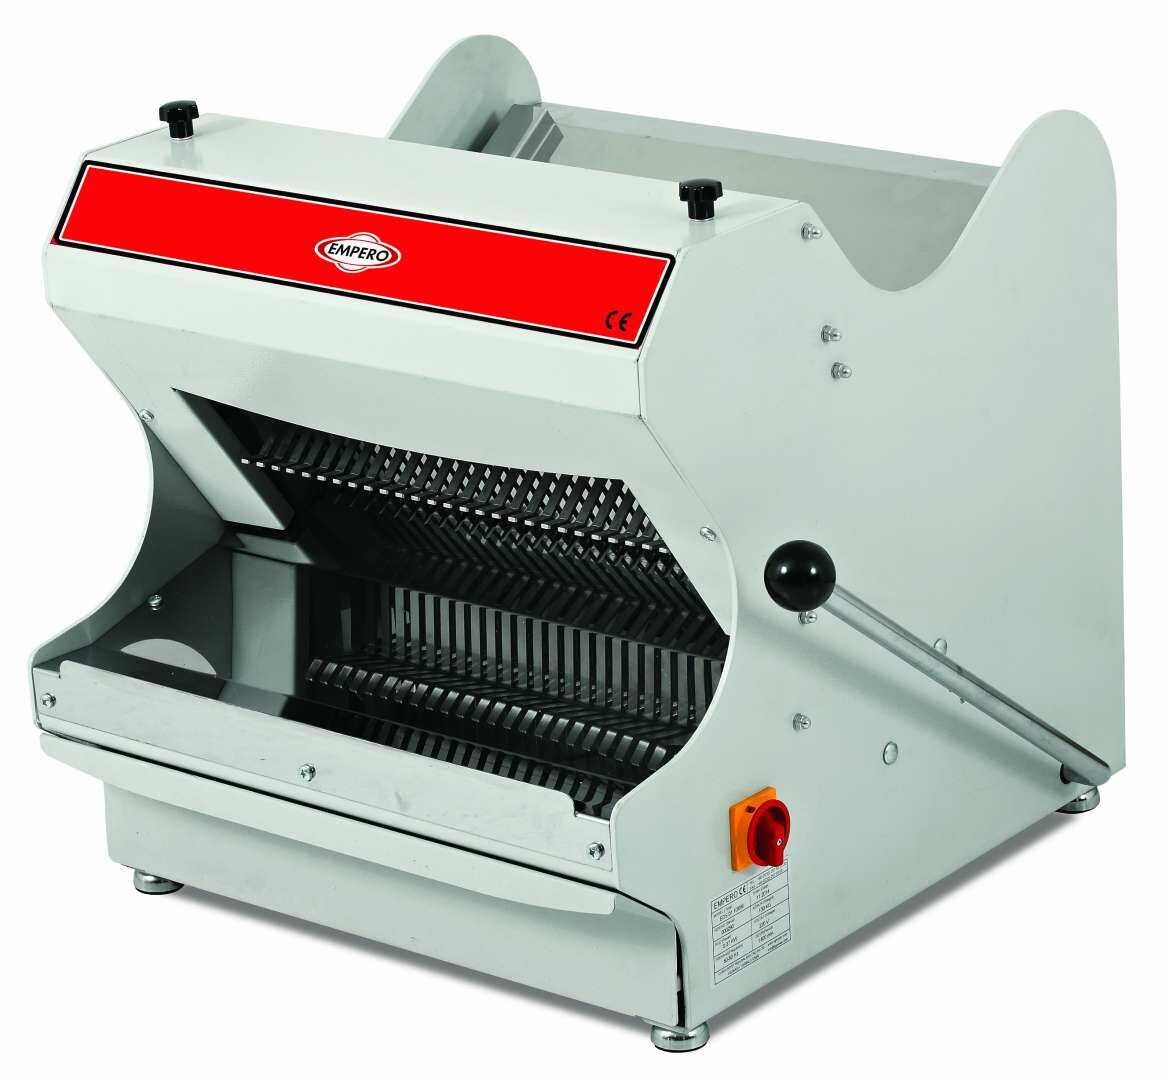 Empero Setüstü Ekmek Dilimleme Makinesi 13 mm EMP.3004-13